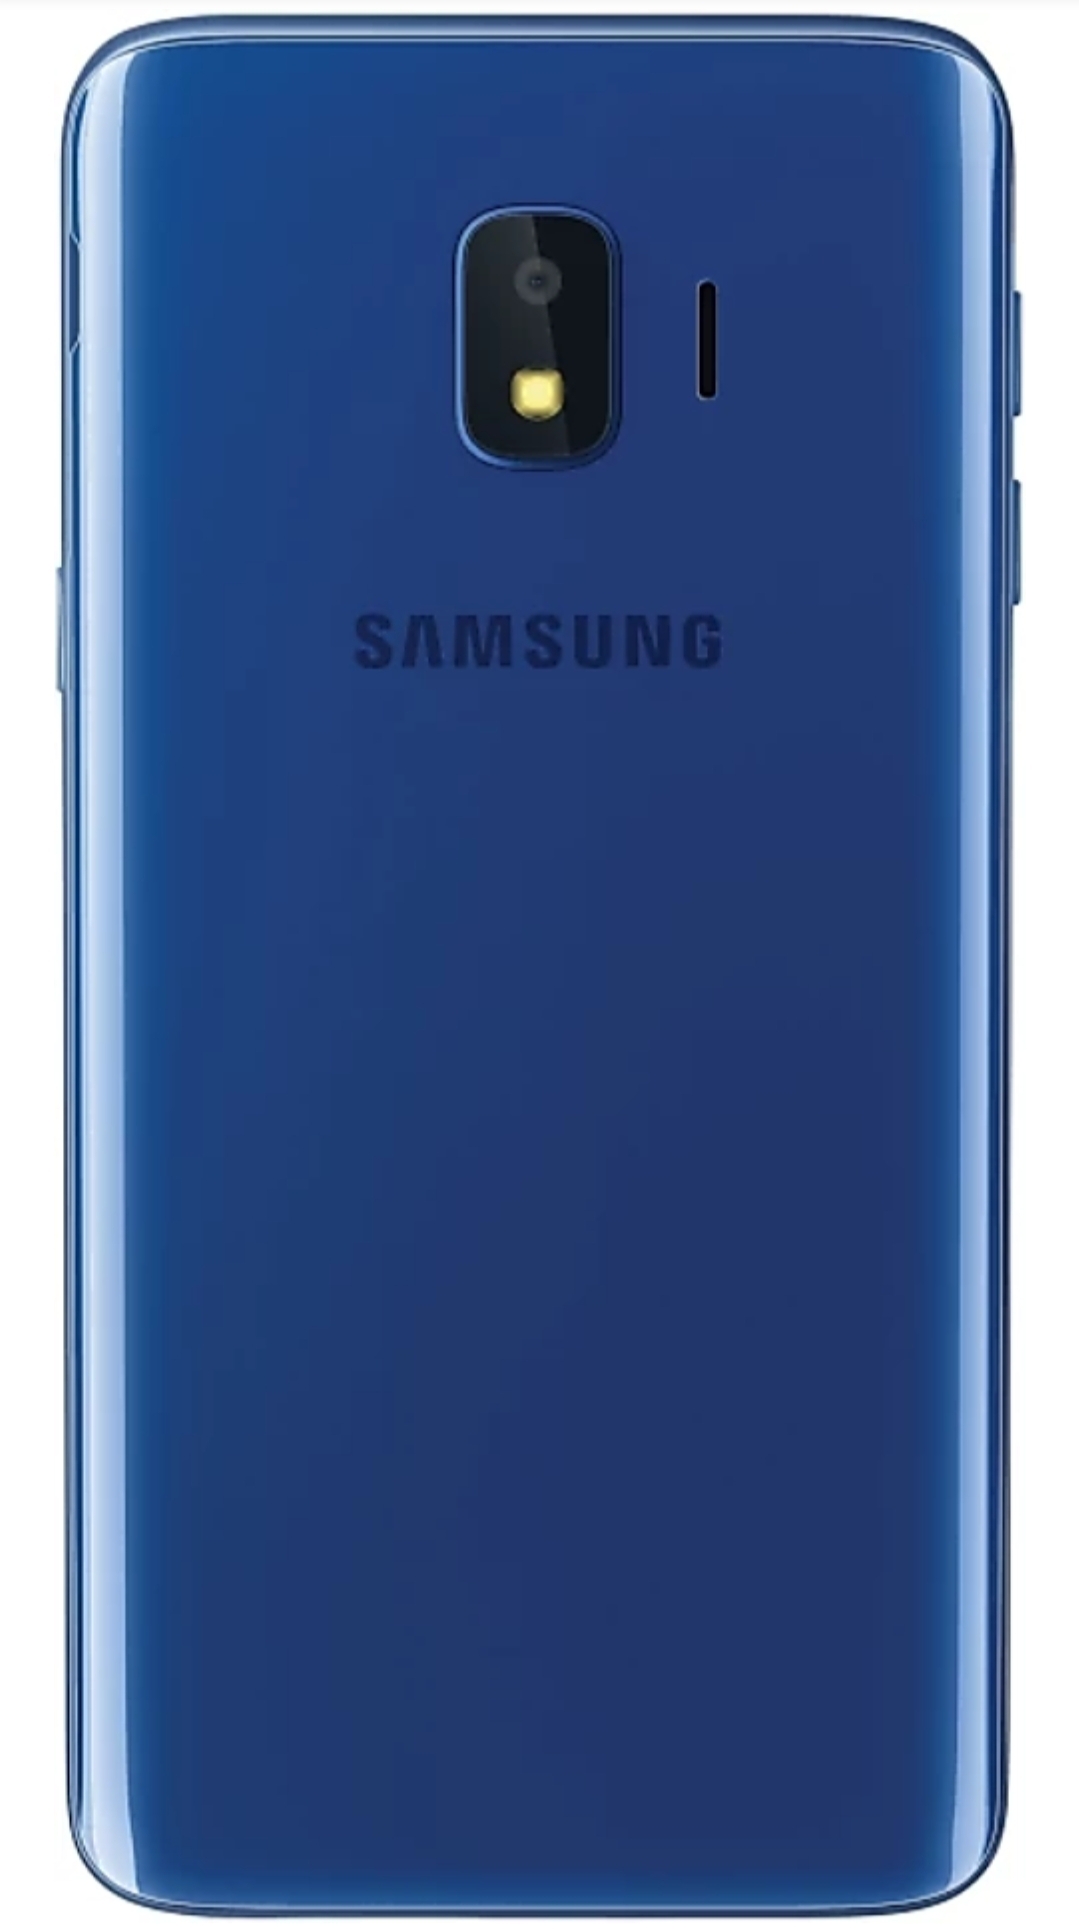 Samsung J2 Core image